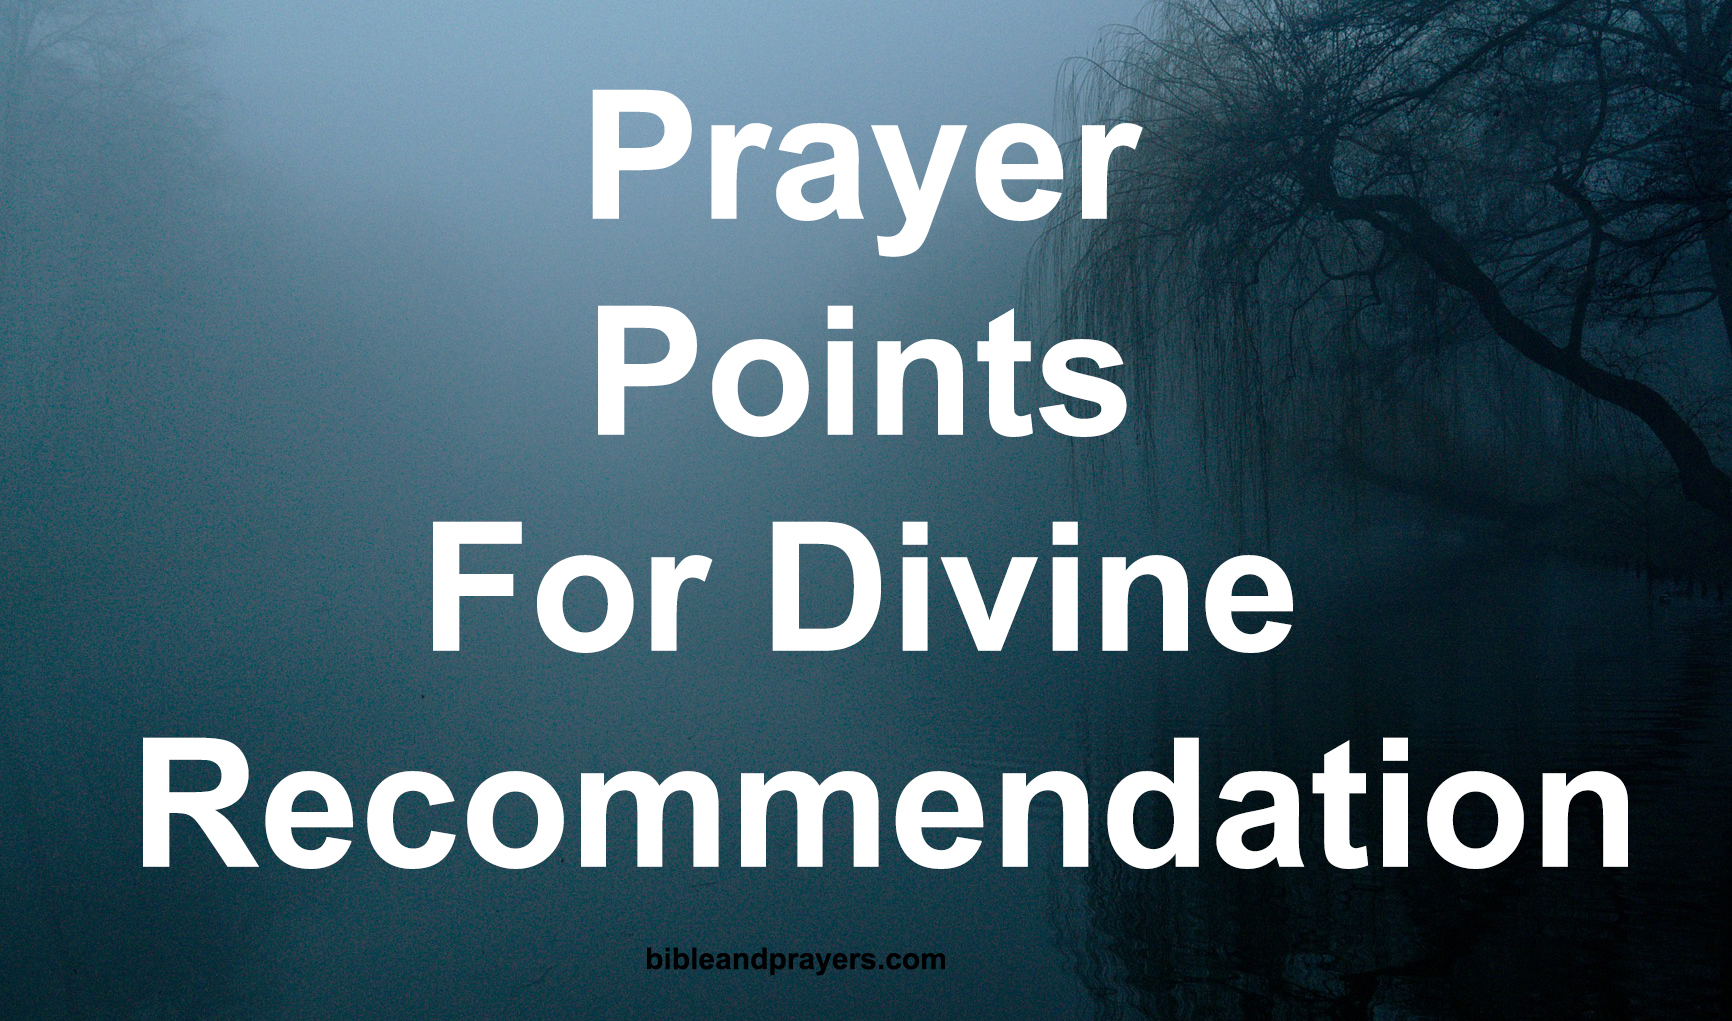 Prayer Points For Divine Recommendation